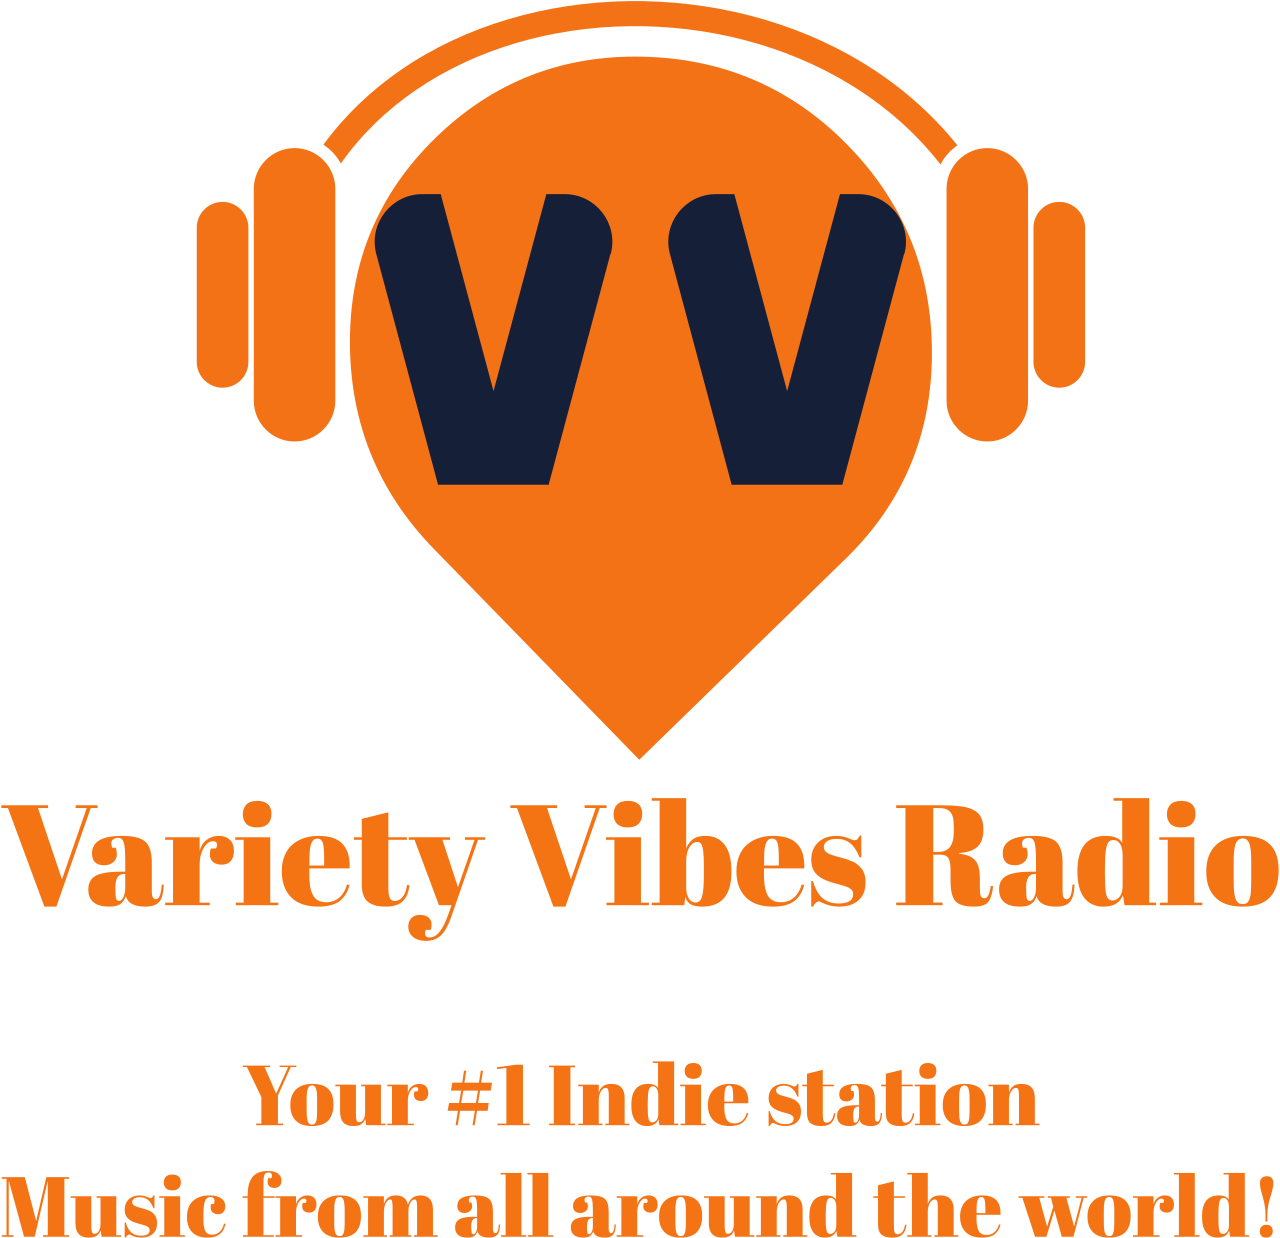 Variety Vibes Radio's logo